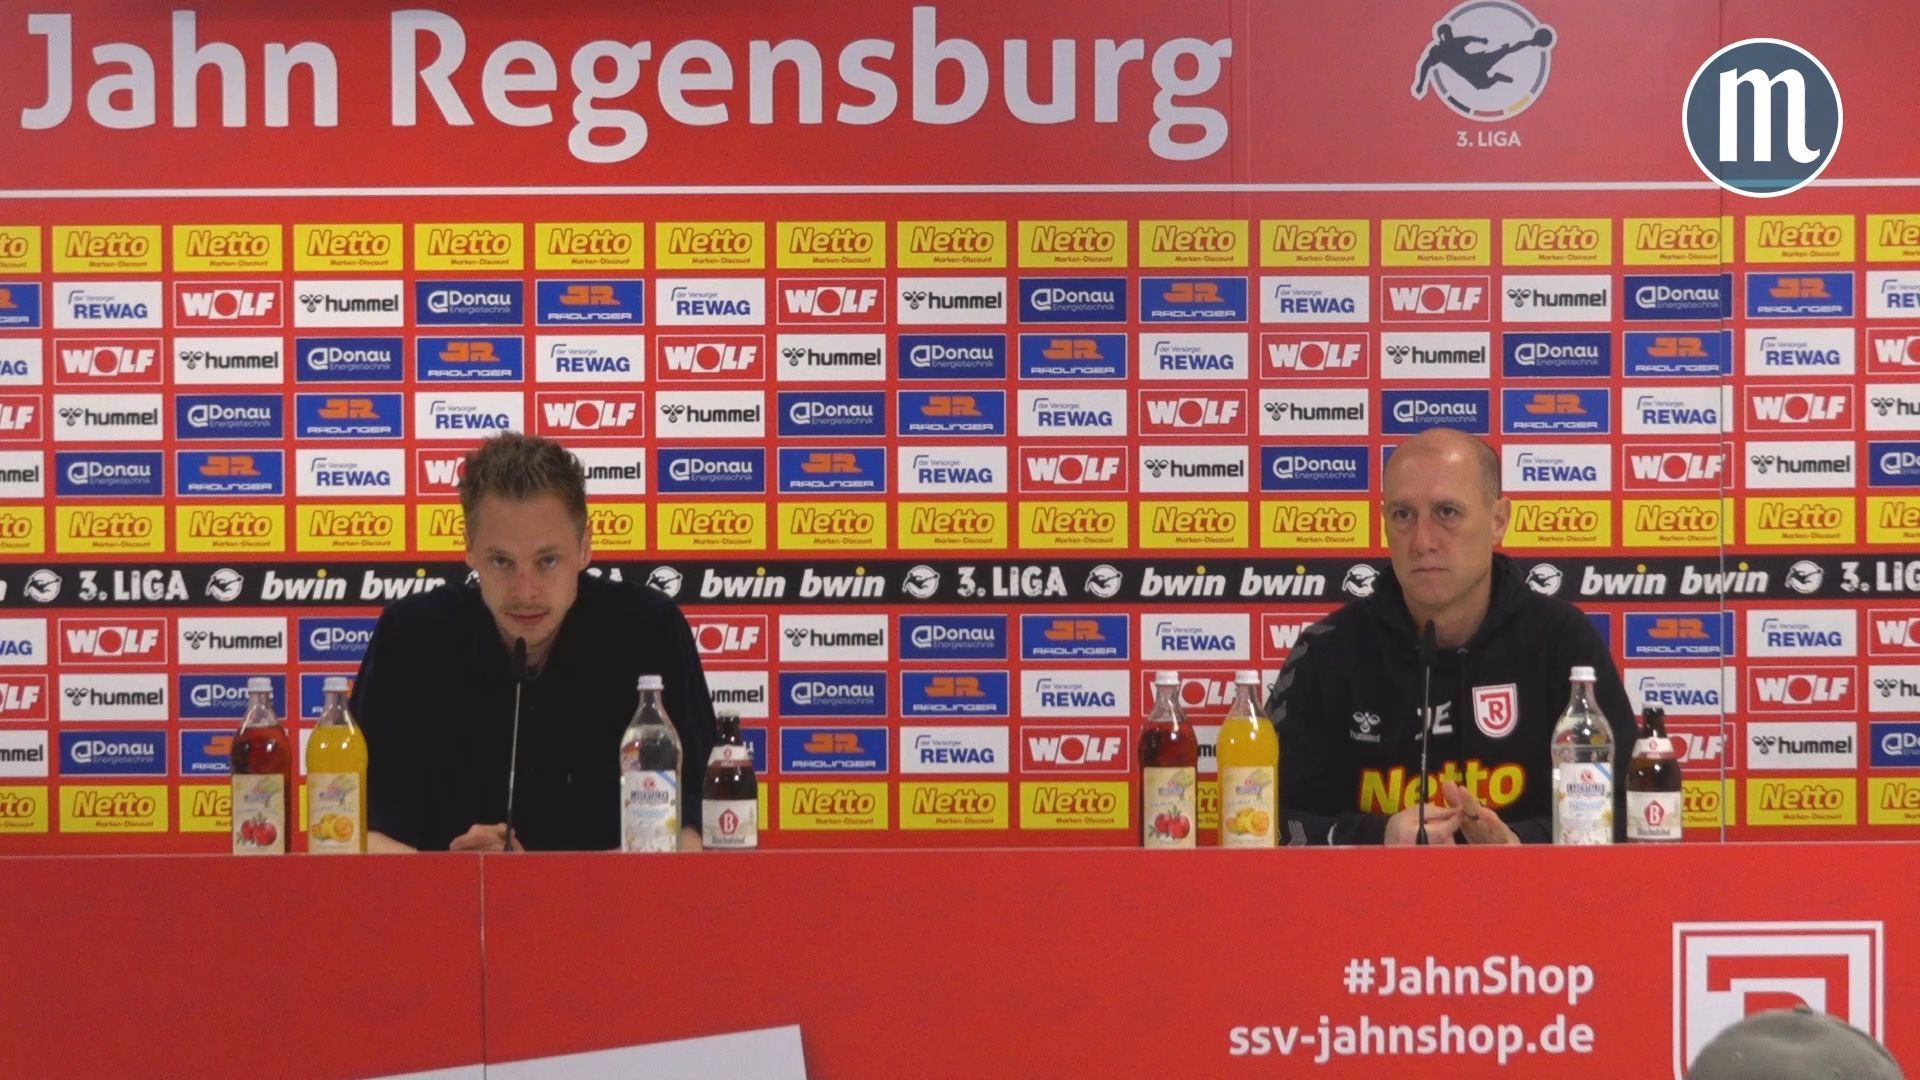 Press conference: Jahn Regensburg face Dynamo Dresden on Saturday